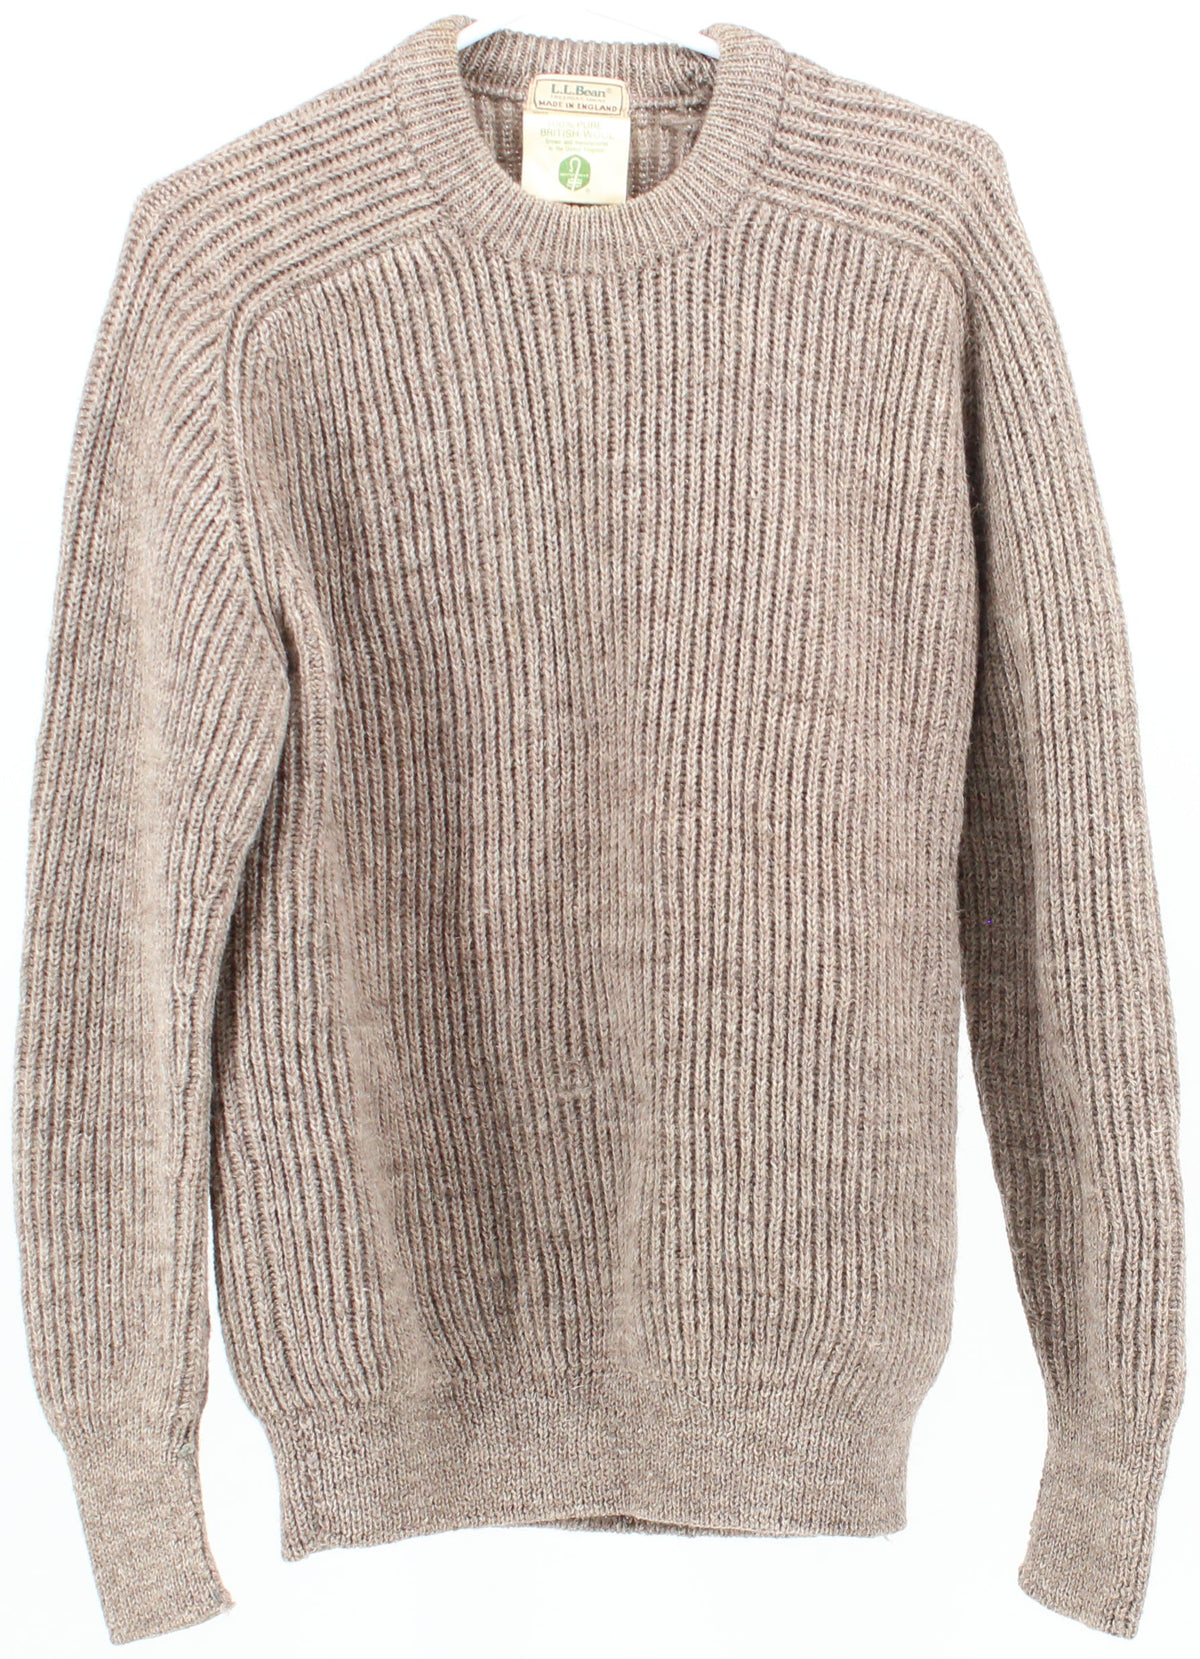 L.L.Bean Brown Sweater